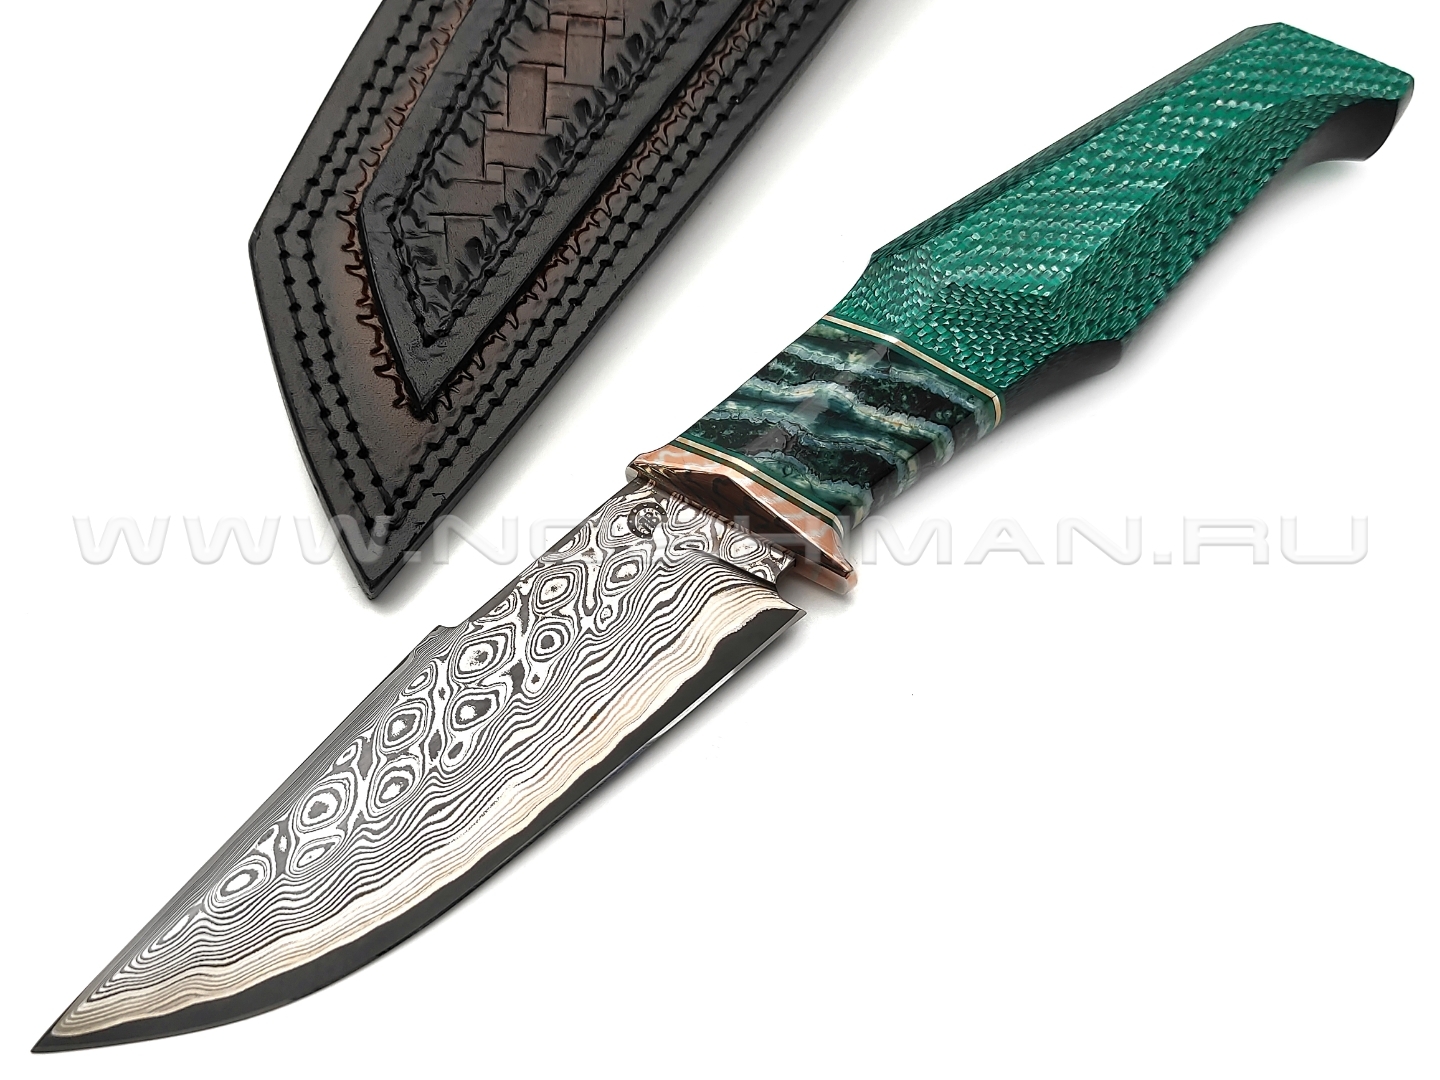 Кузница Васильева нож НЛВ137 ламинат CPM Rex 121, рукоять Silver Twill Emerald, мокумэ-ганэ, зуб мамонта